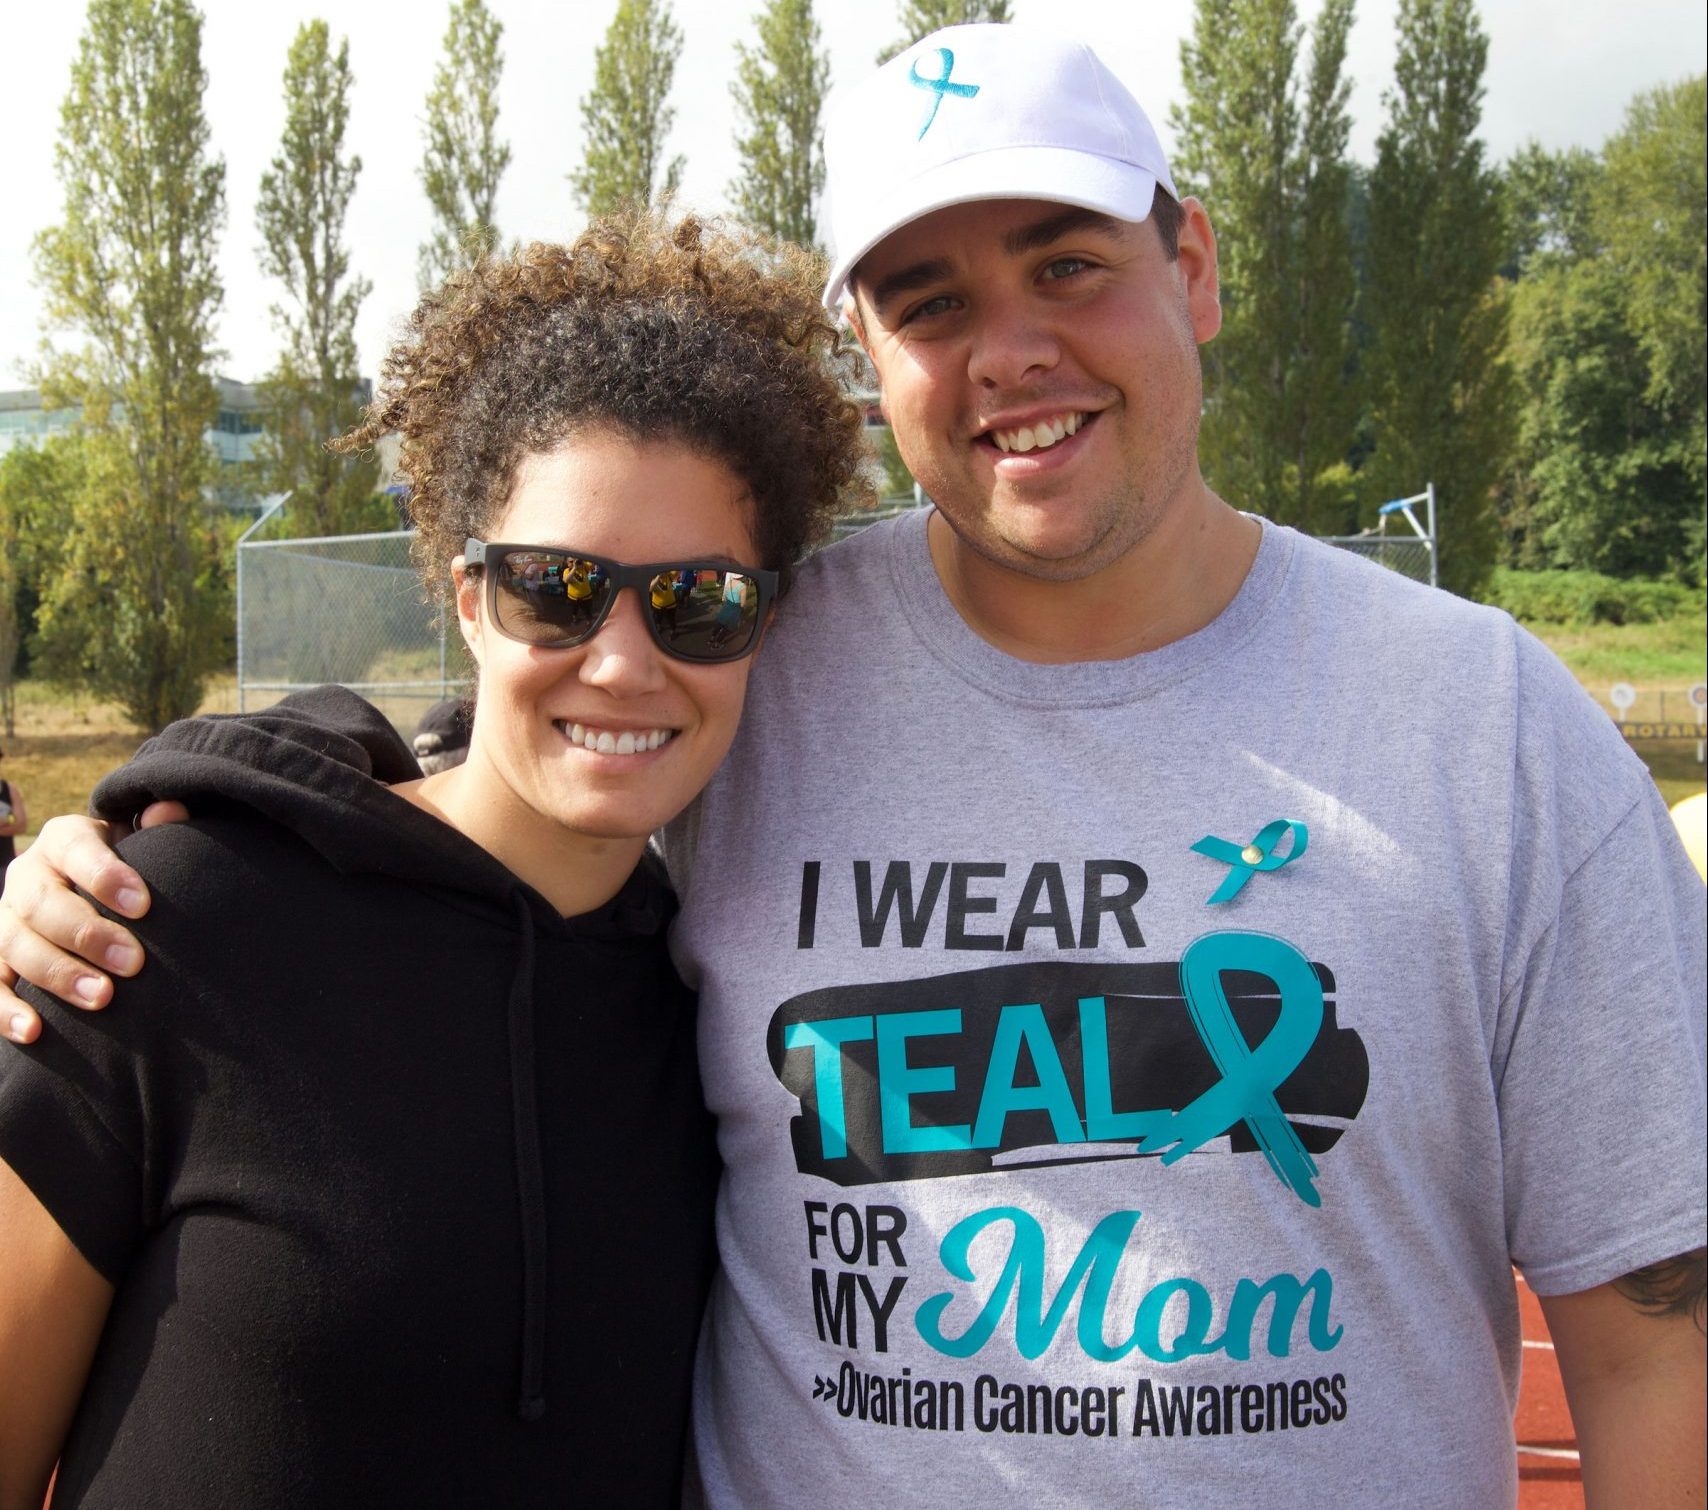 'I wear teal for my mom' shirt - Nanaimo, BC